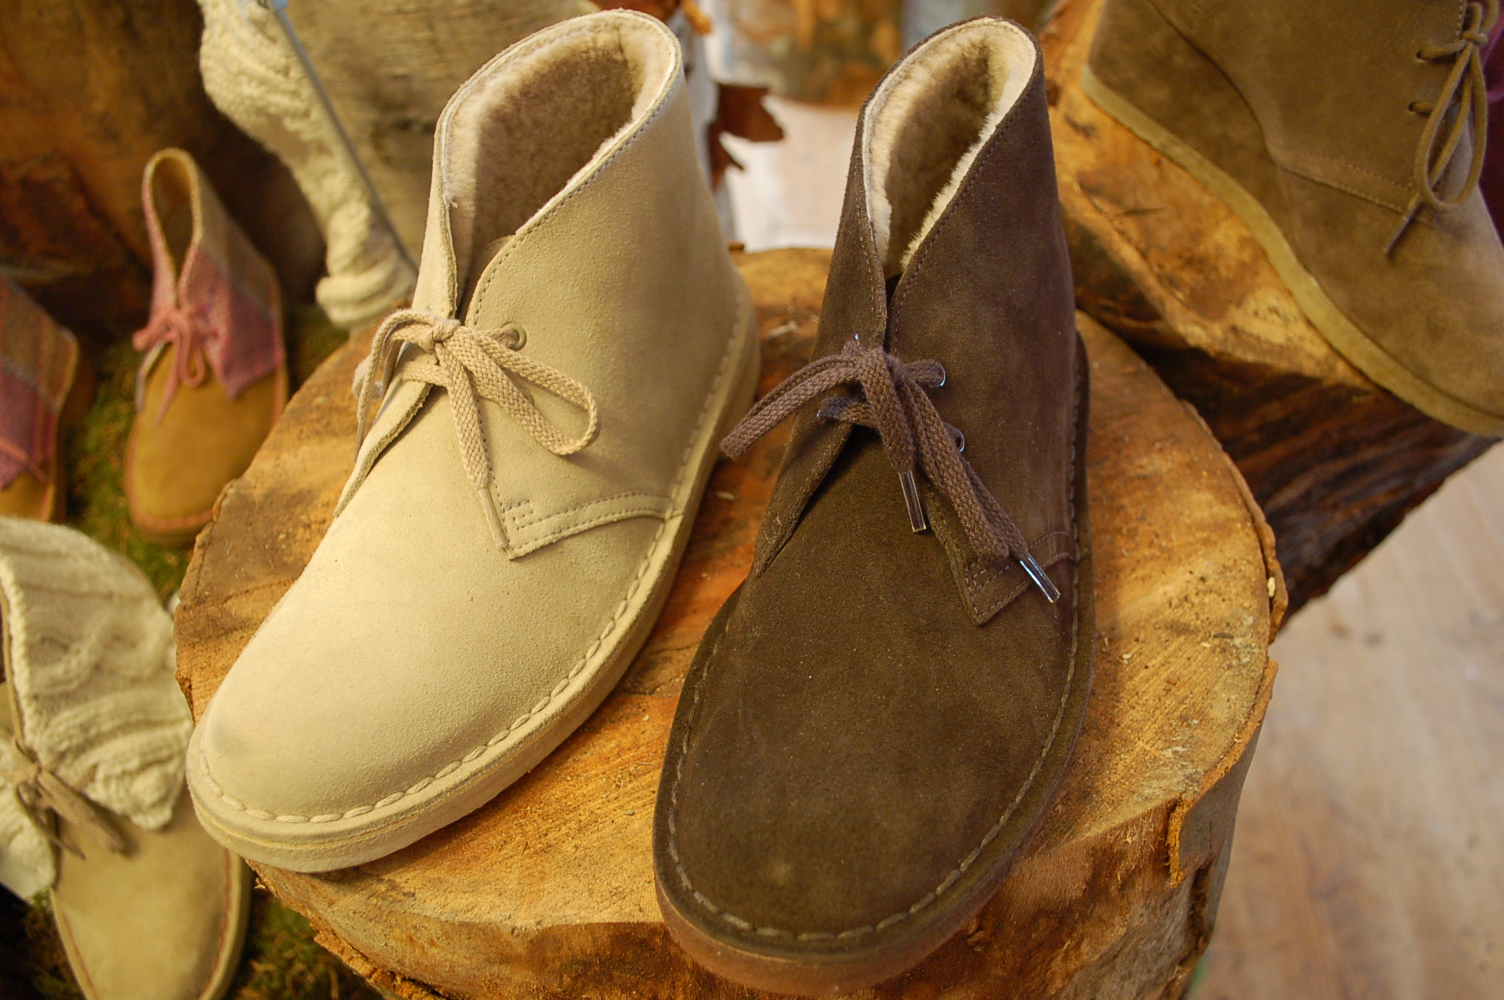 Clarks sheepskin Desert Boots, the new 